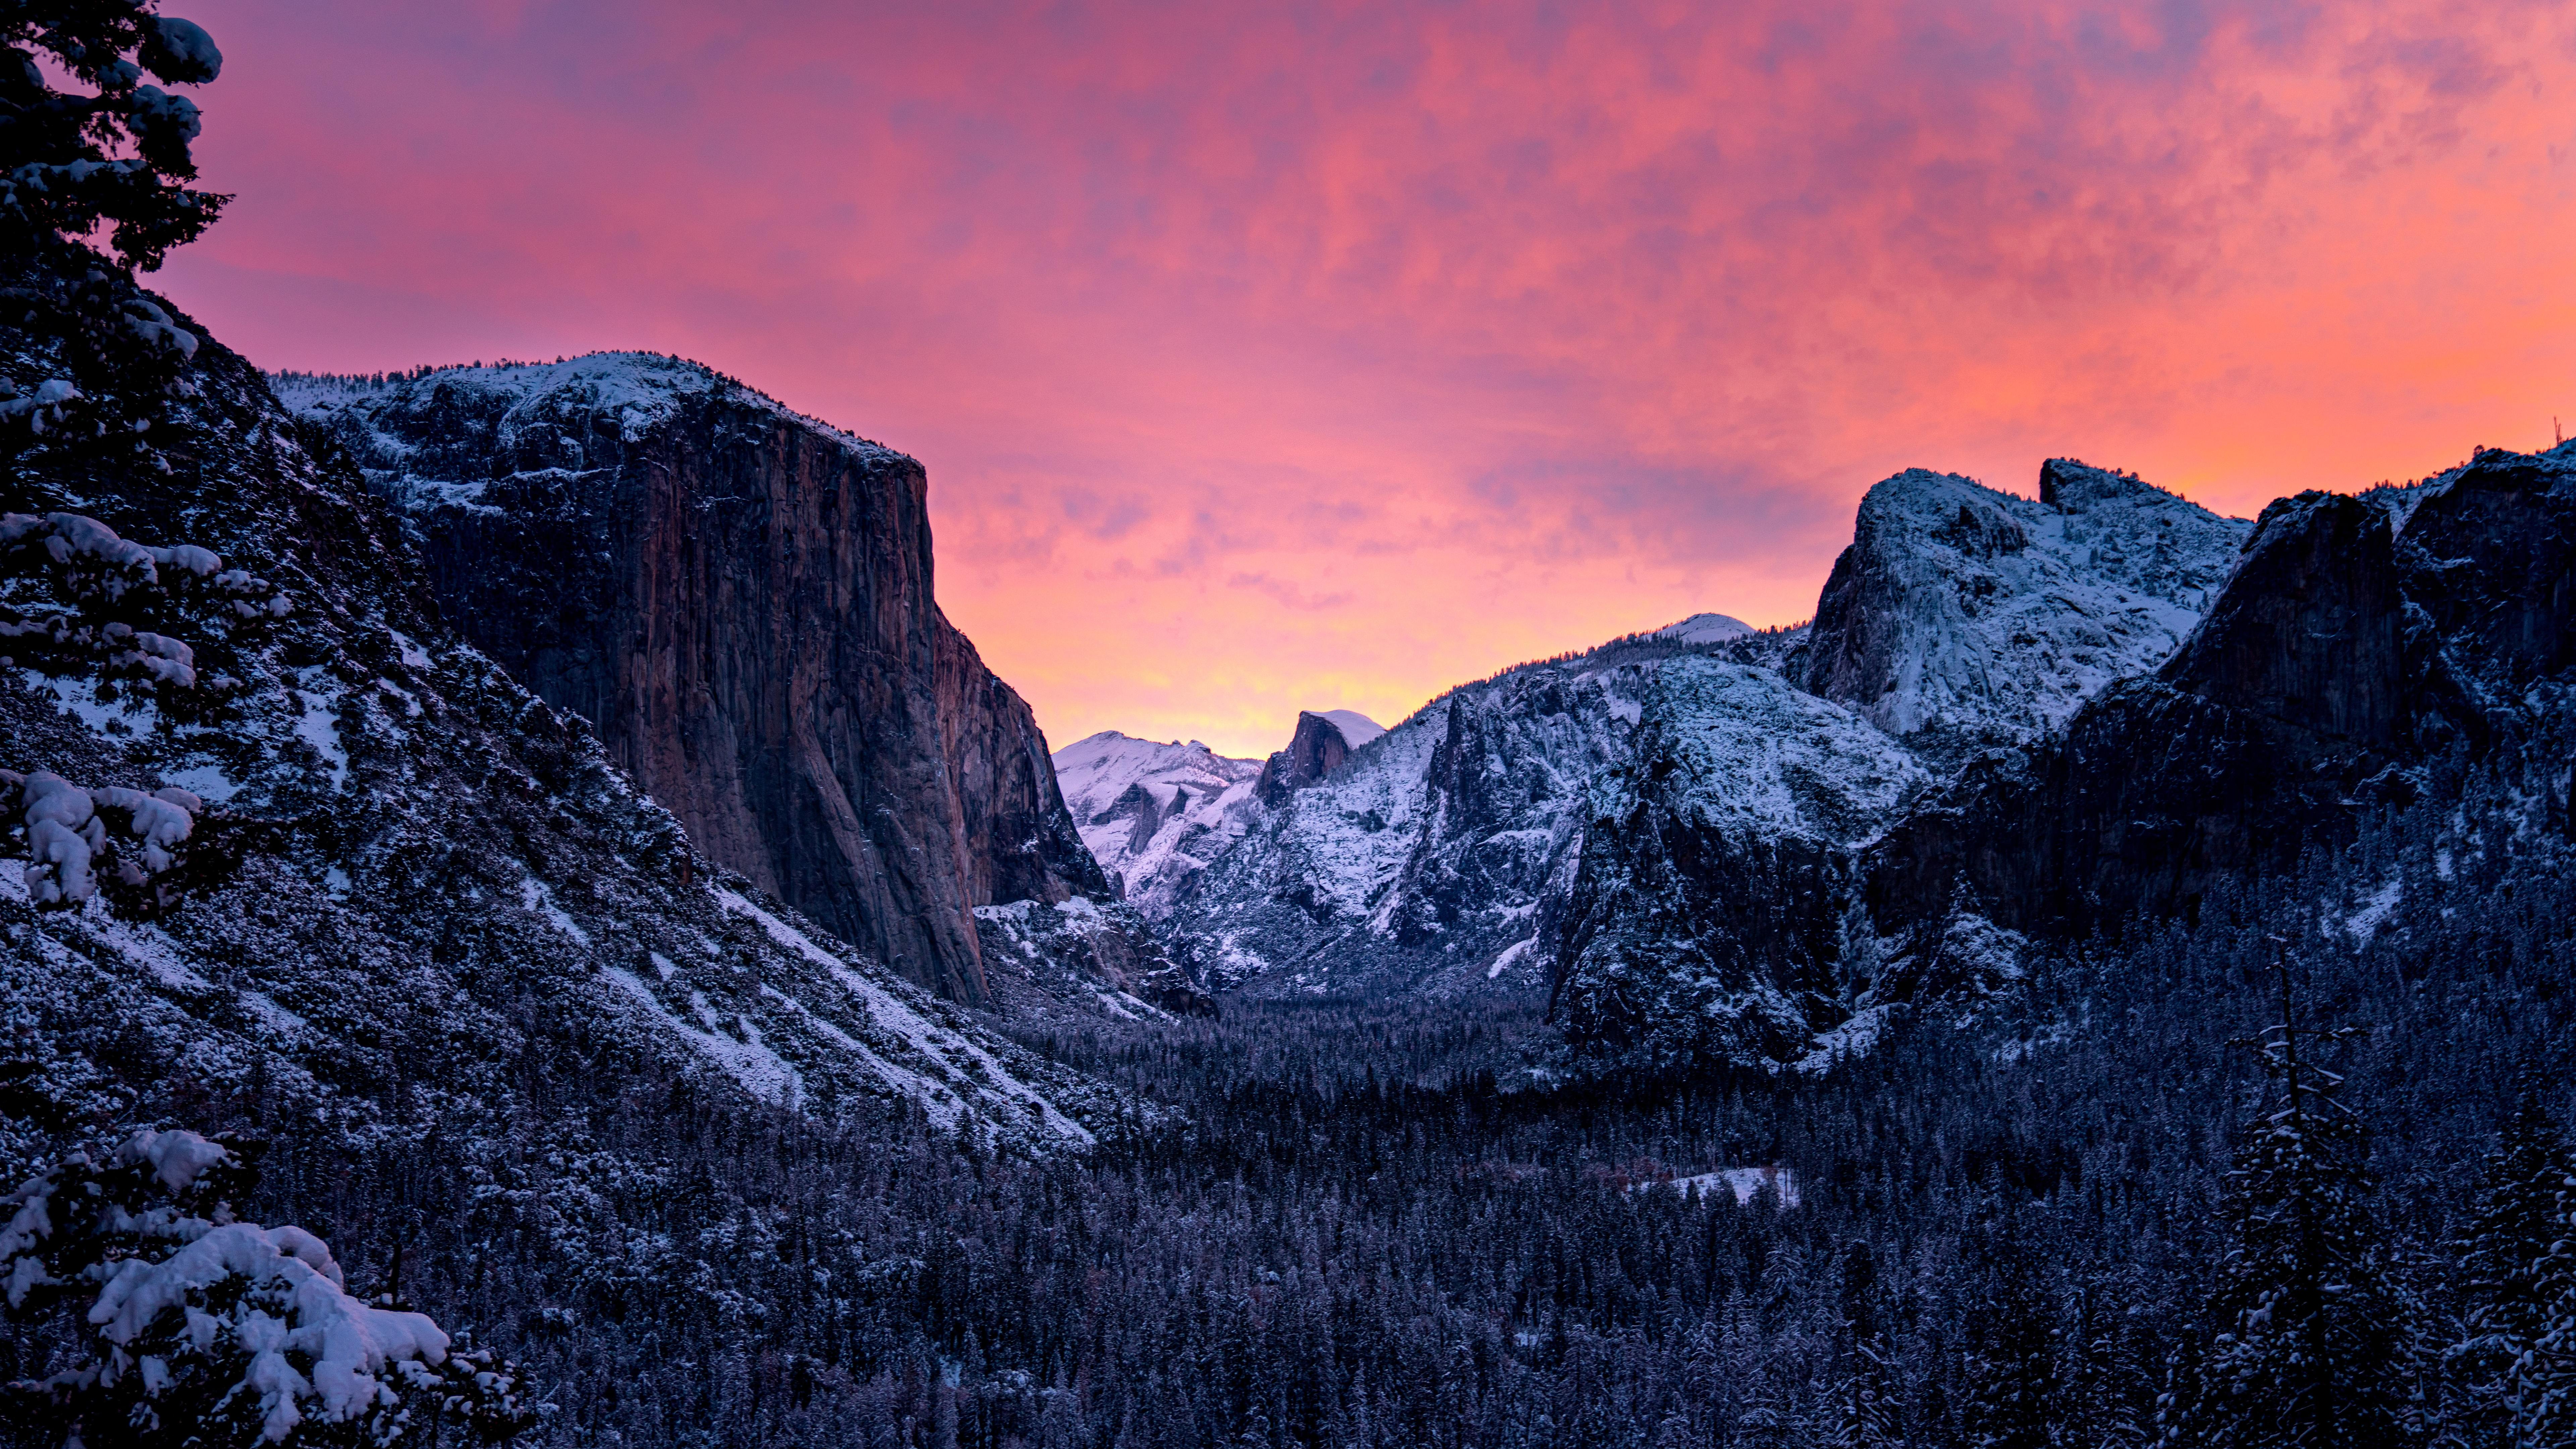 Nature Yosemite National Park 8k Ultra HD Wallpaper By Jeremy Bishop